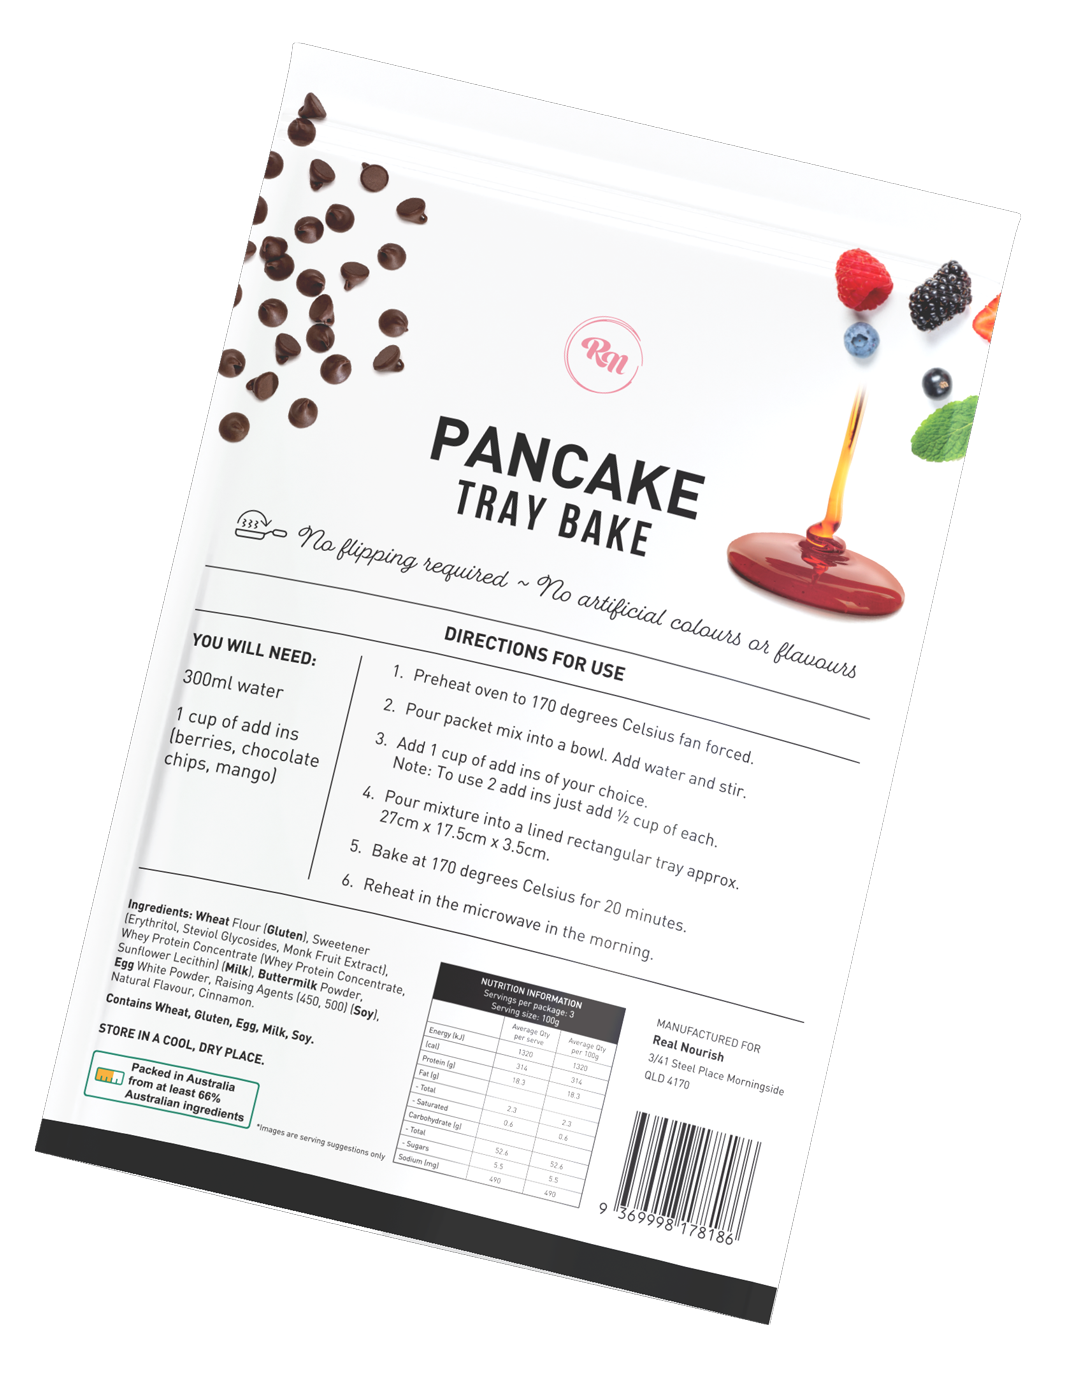 Real Nourish - Pancake Tray Bake - No flipping. You choose your flavour!